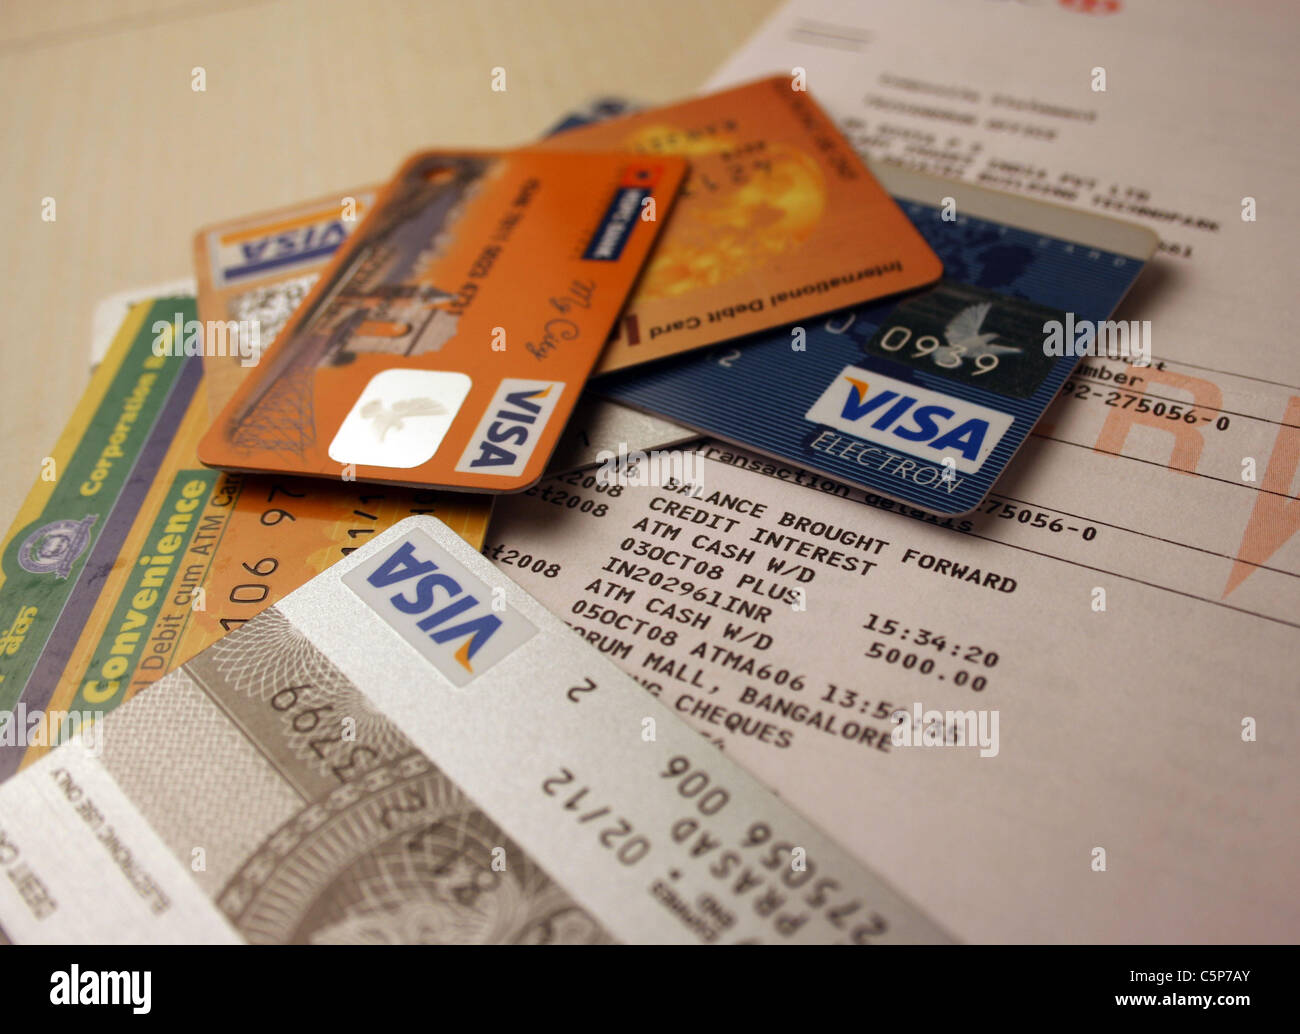 Kontoauszug mit Kreditkarten überzogen Stockfoto